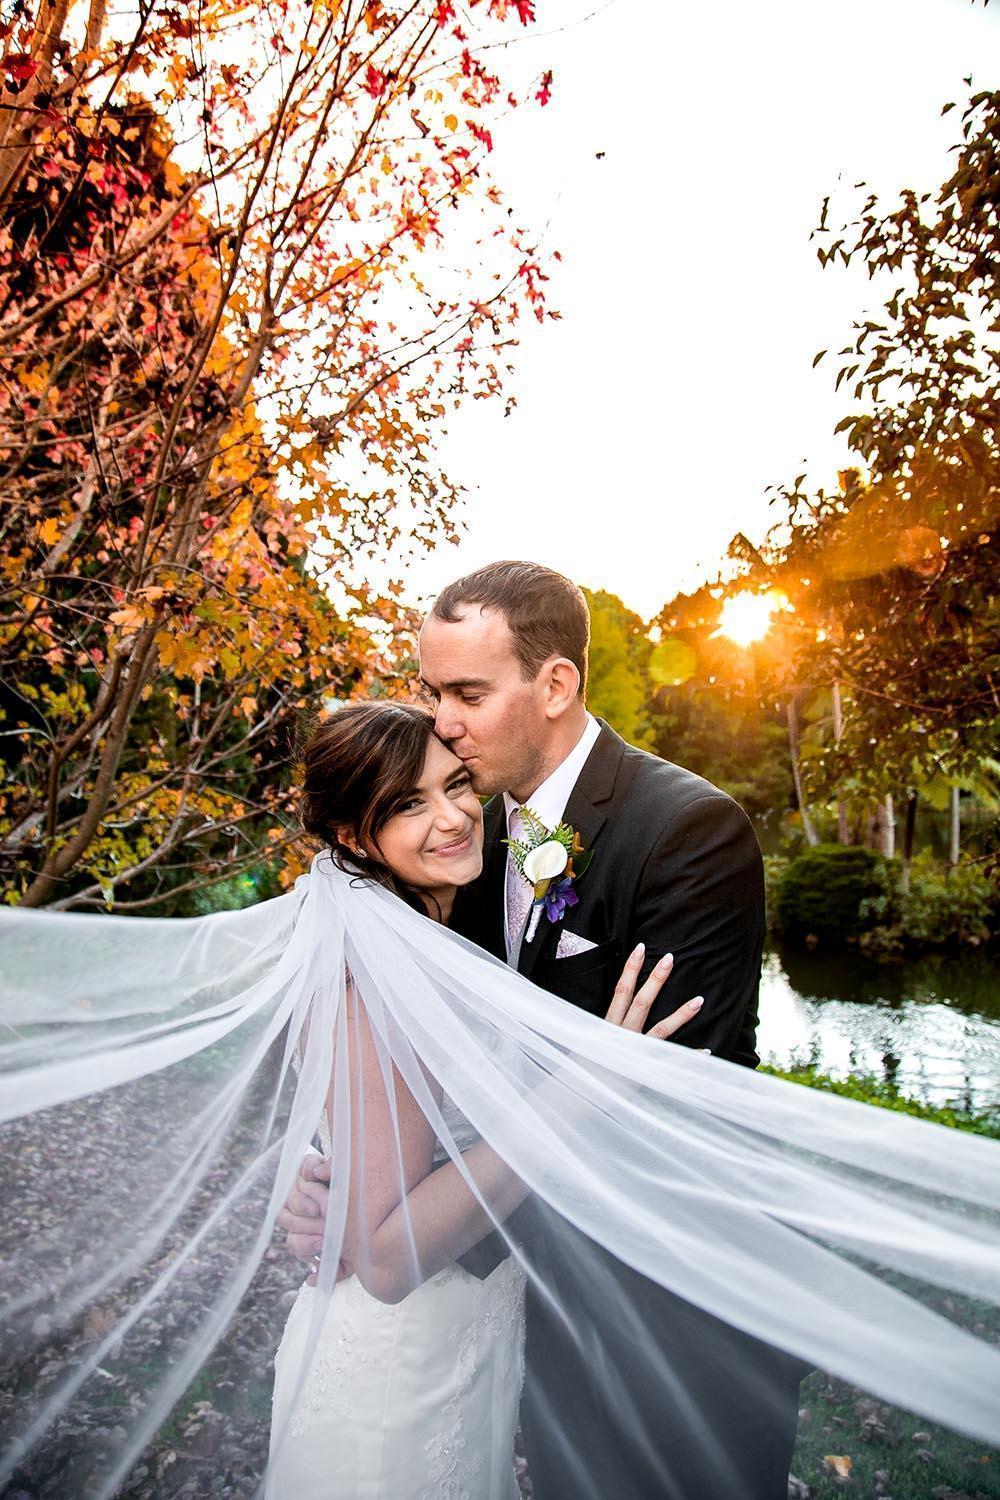 James& Megan Wedding Photography Couple Embracing with flowing veil